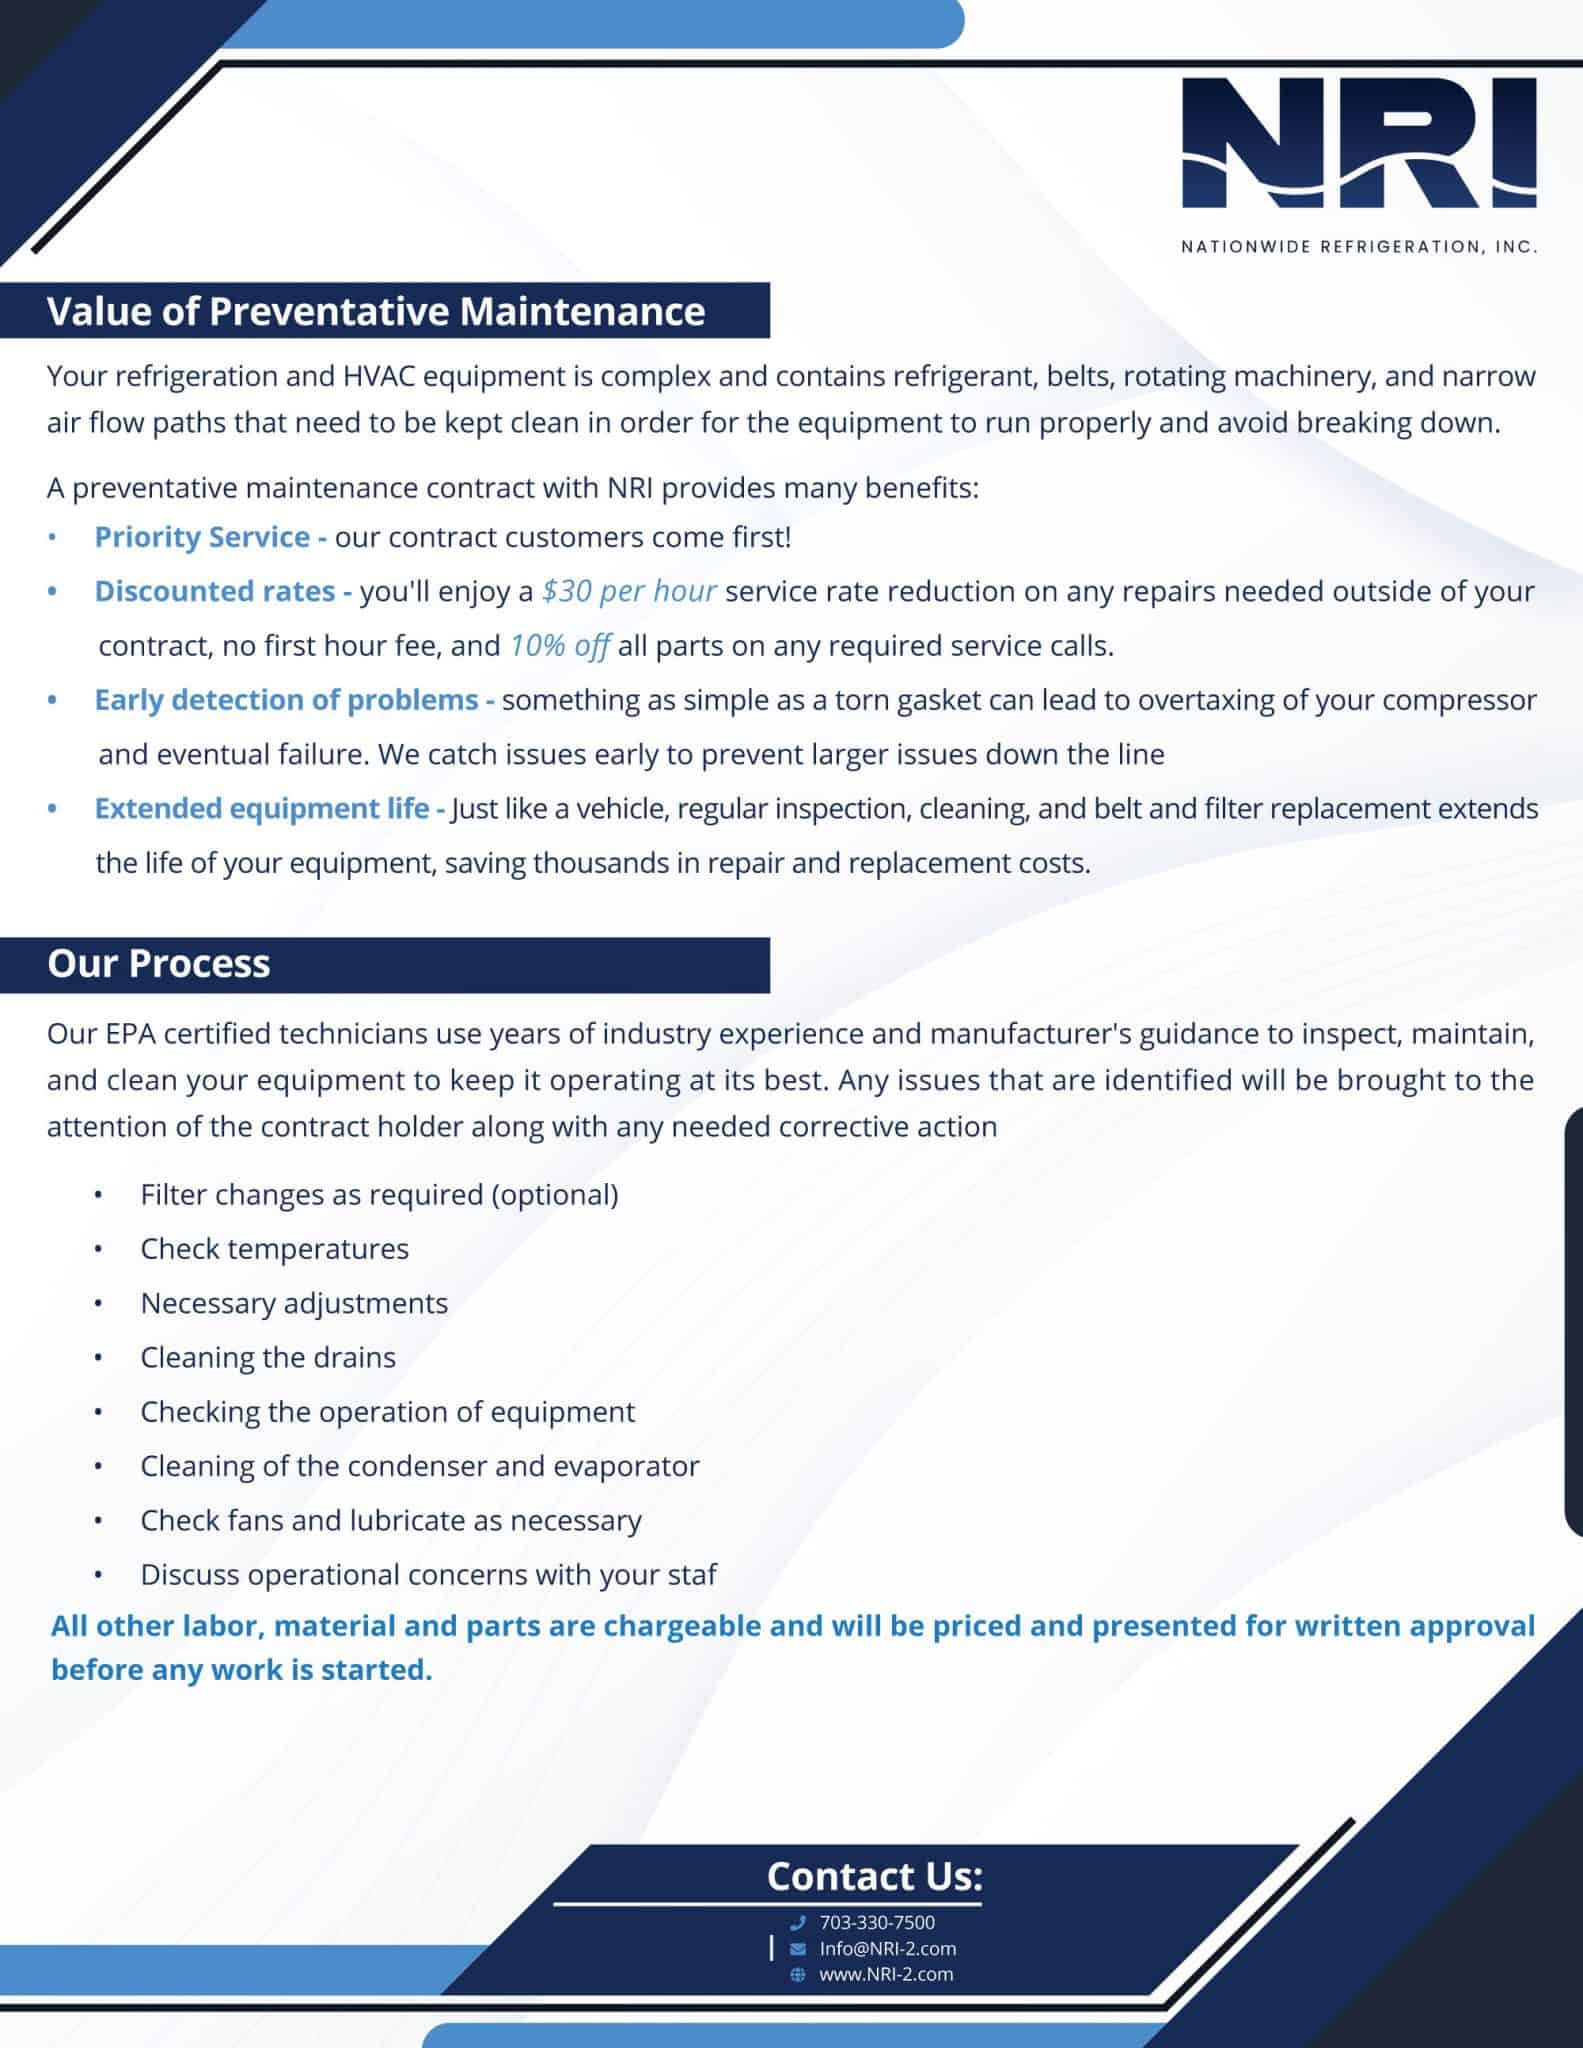 Preventative Maintenance Contracts - Nationwide Refrigeration, Inc.